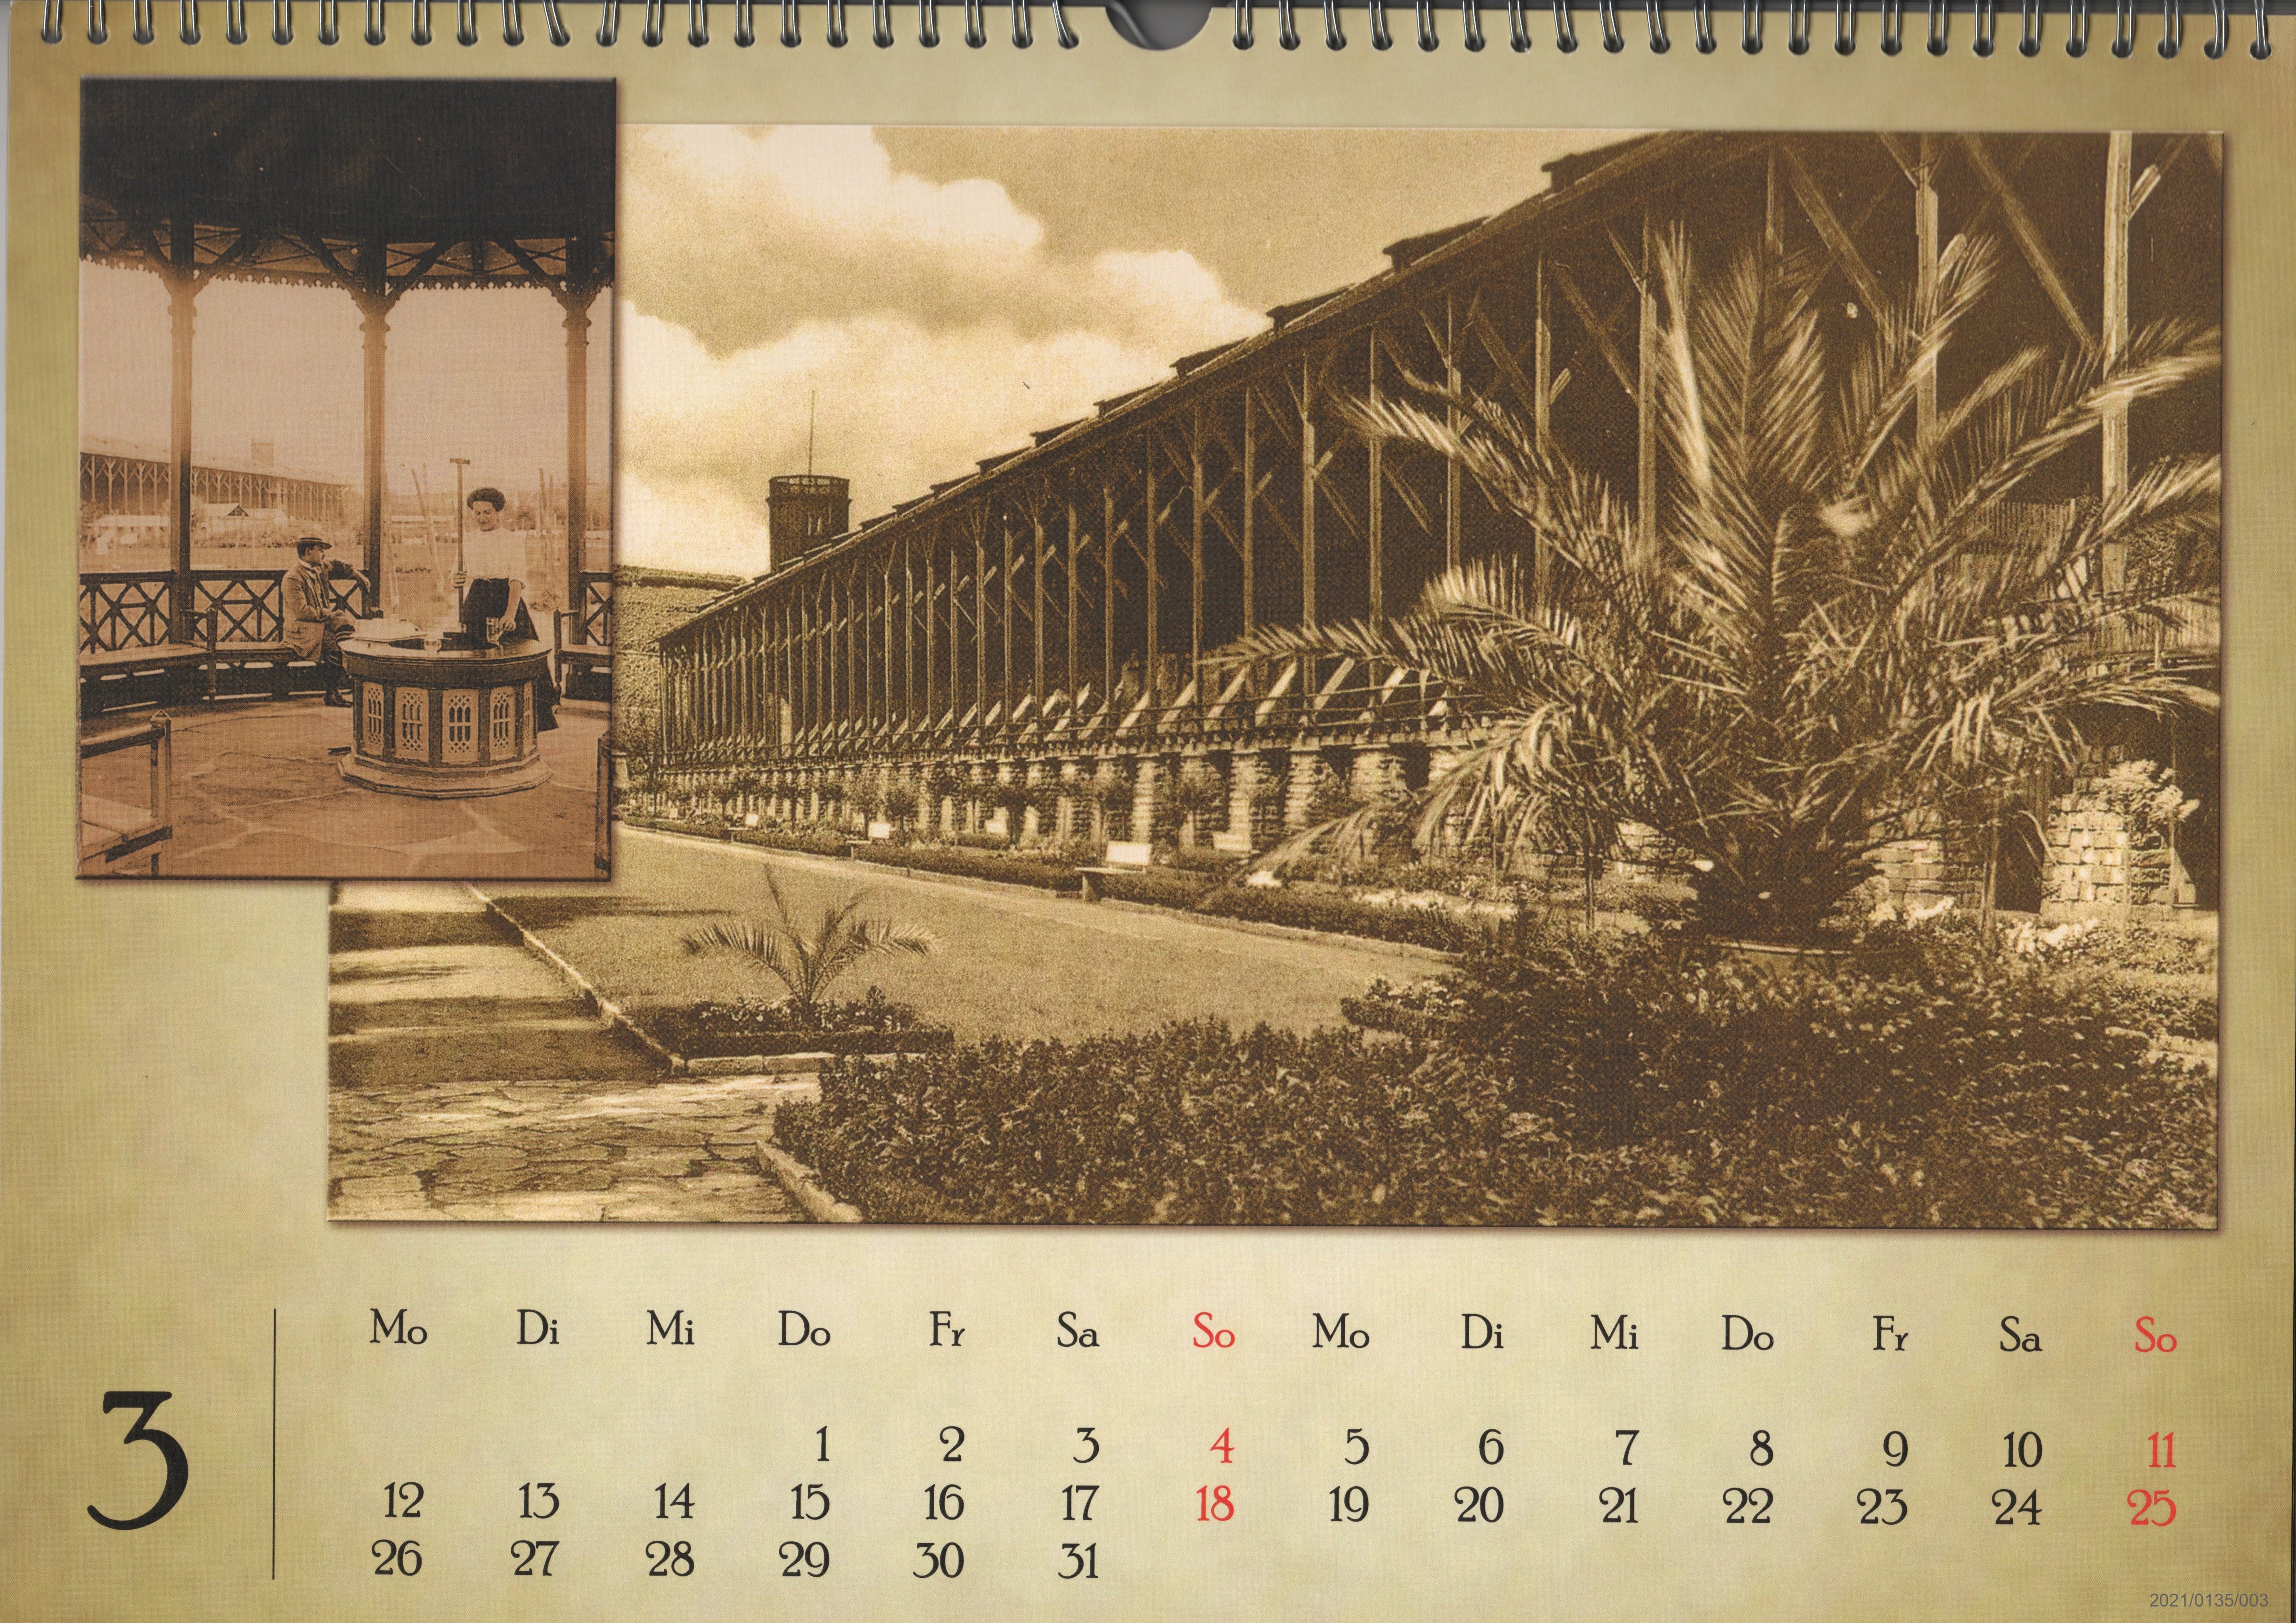 Unser Gradierbau Kalender 2012: Monat März (Museumsgesellschaft Bad Dürkheim e. V. CC BY-NC-SA)